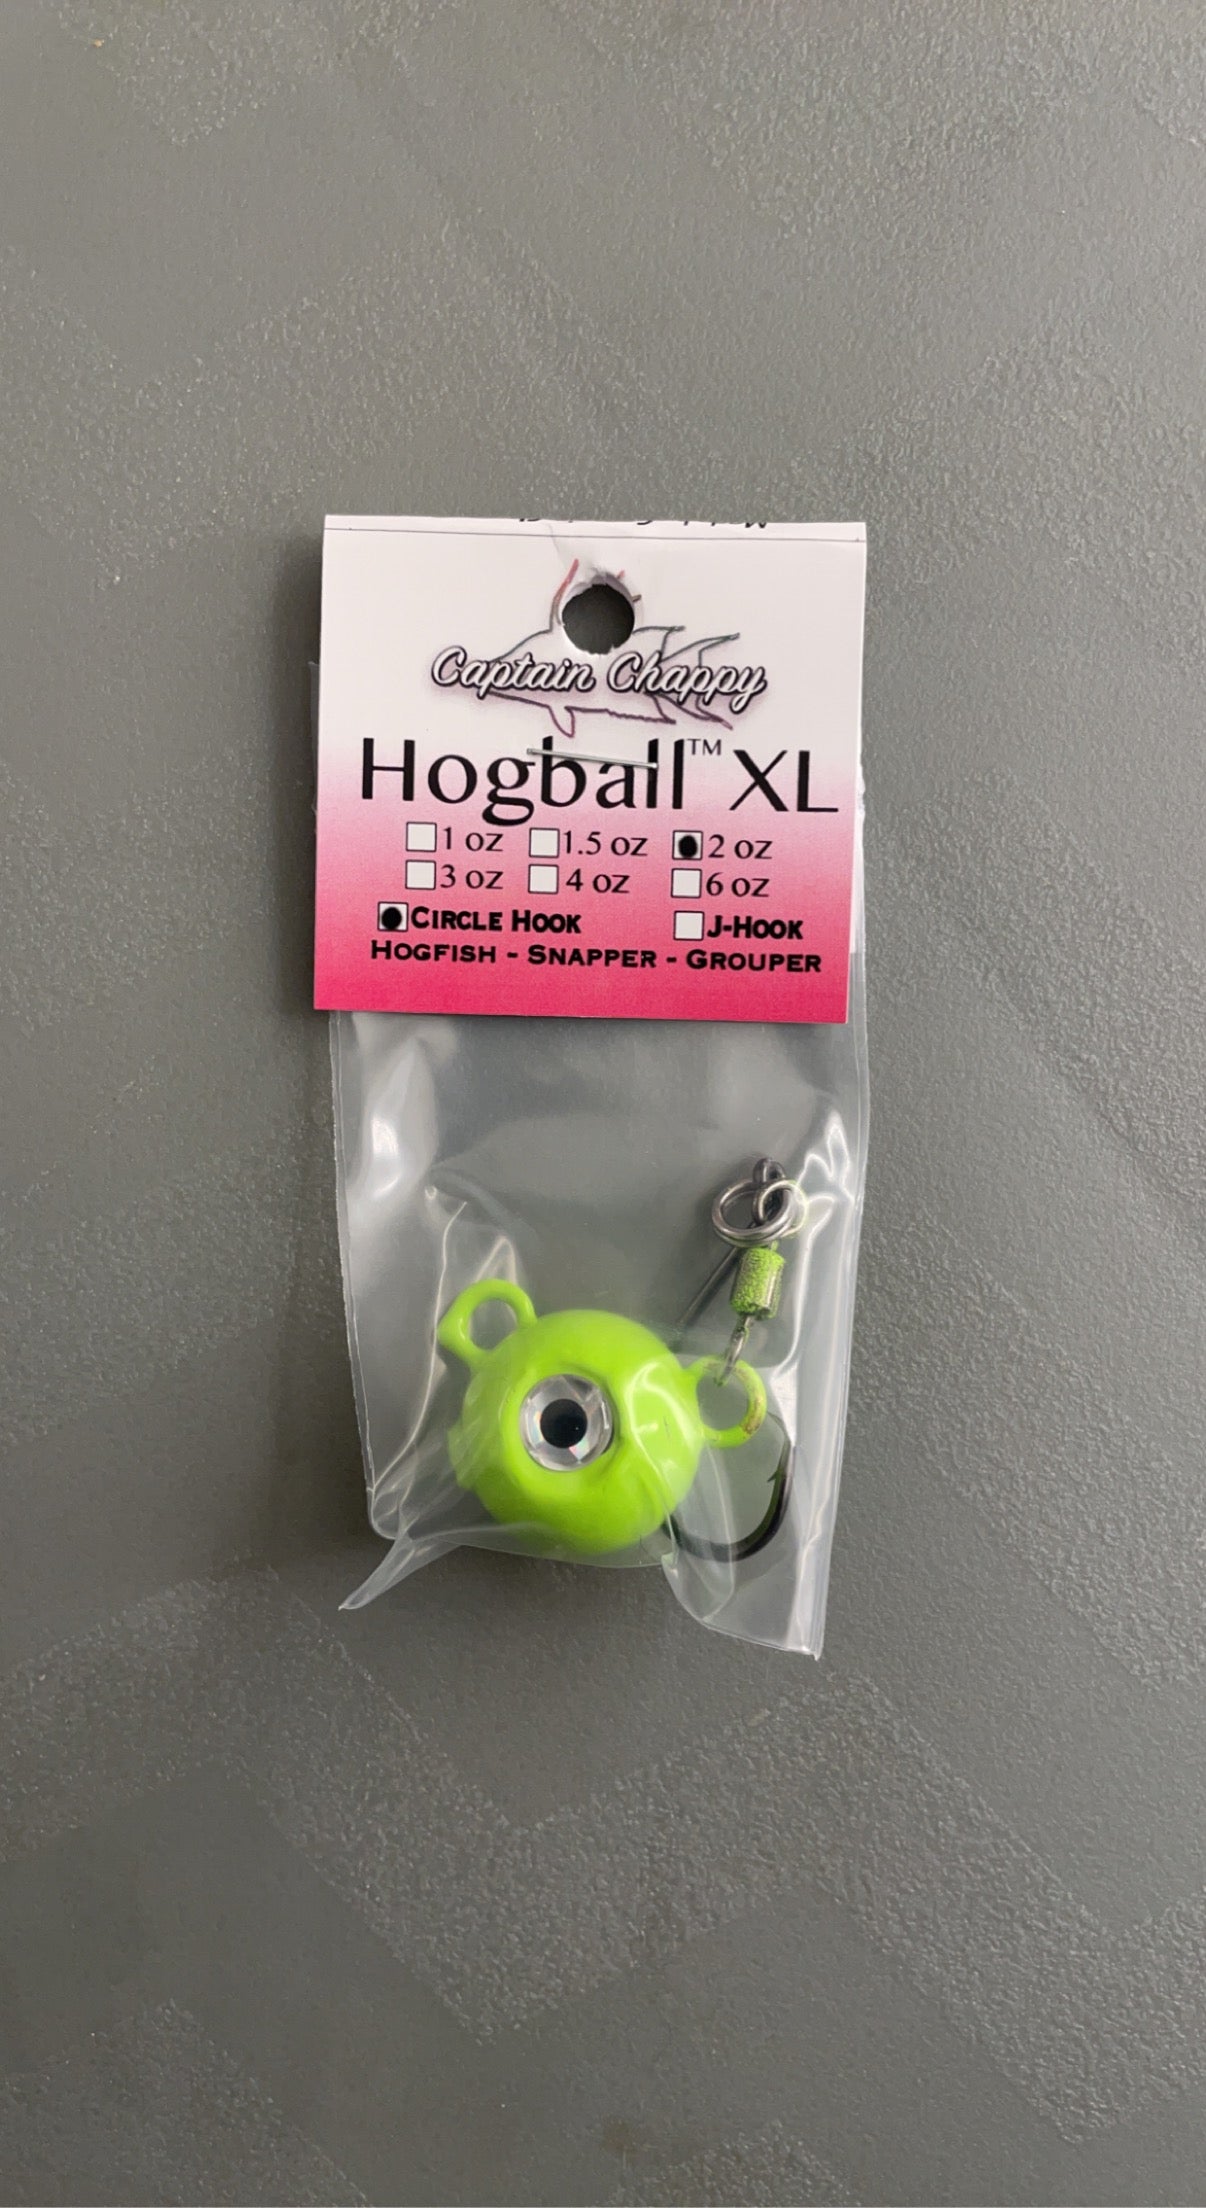 Hogball XL - Captain Chappy